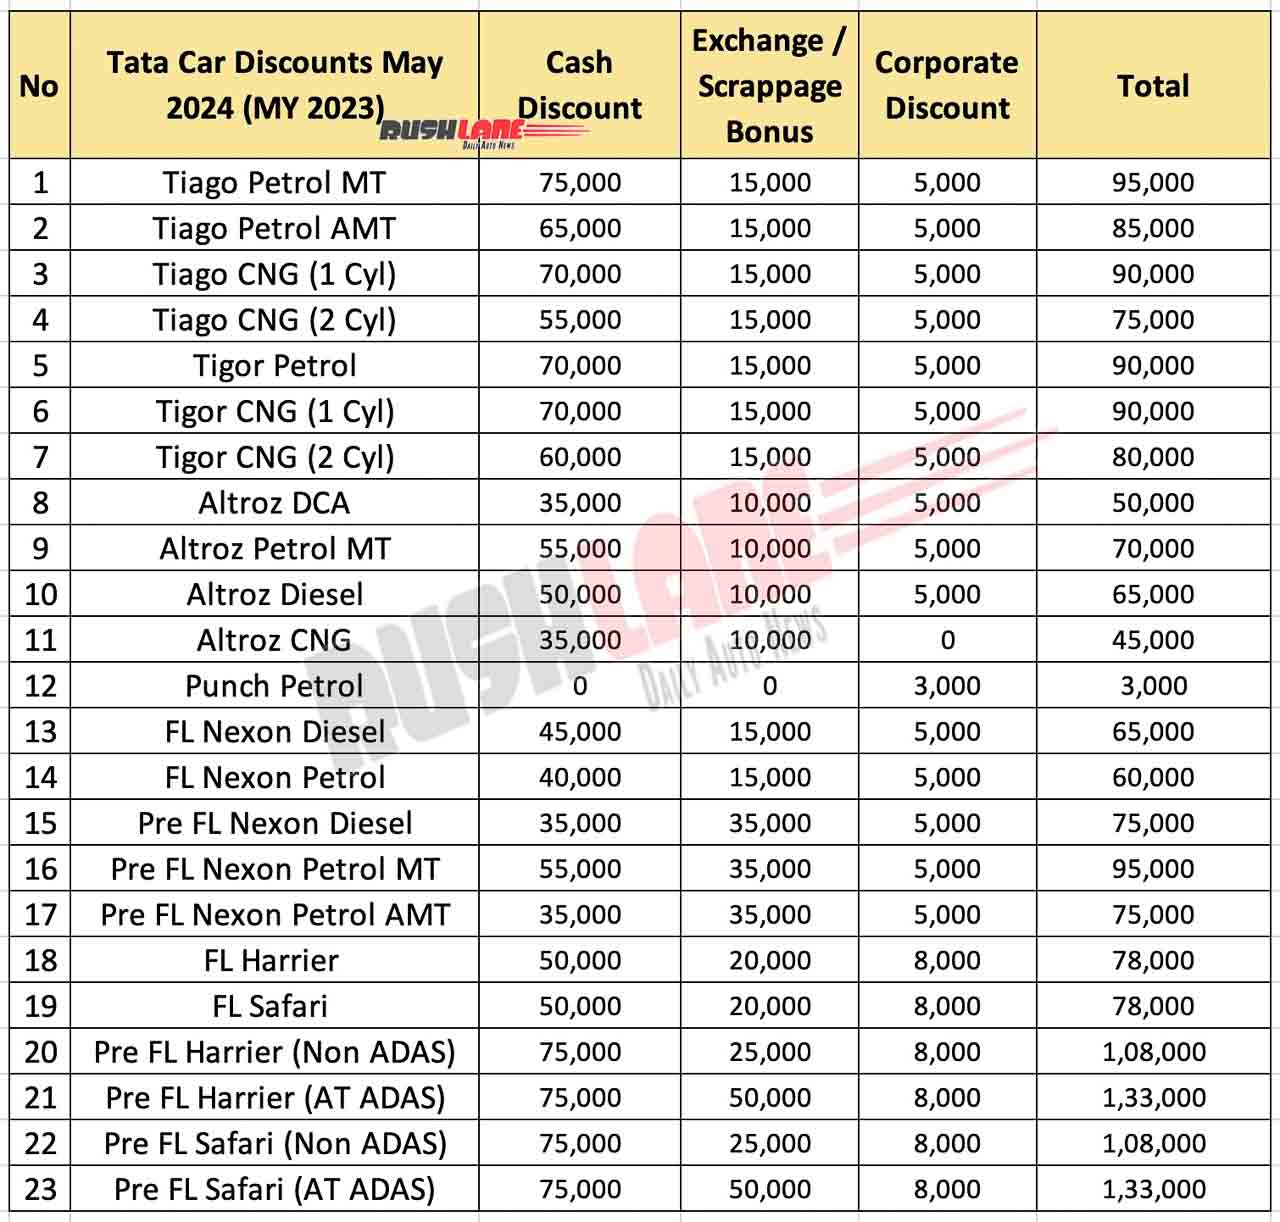 Tata Car Discounts May 2024 - Manufacturing Year 2023 (MY2023)